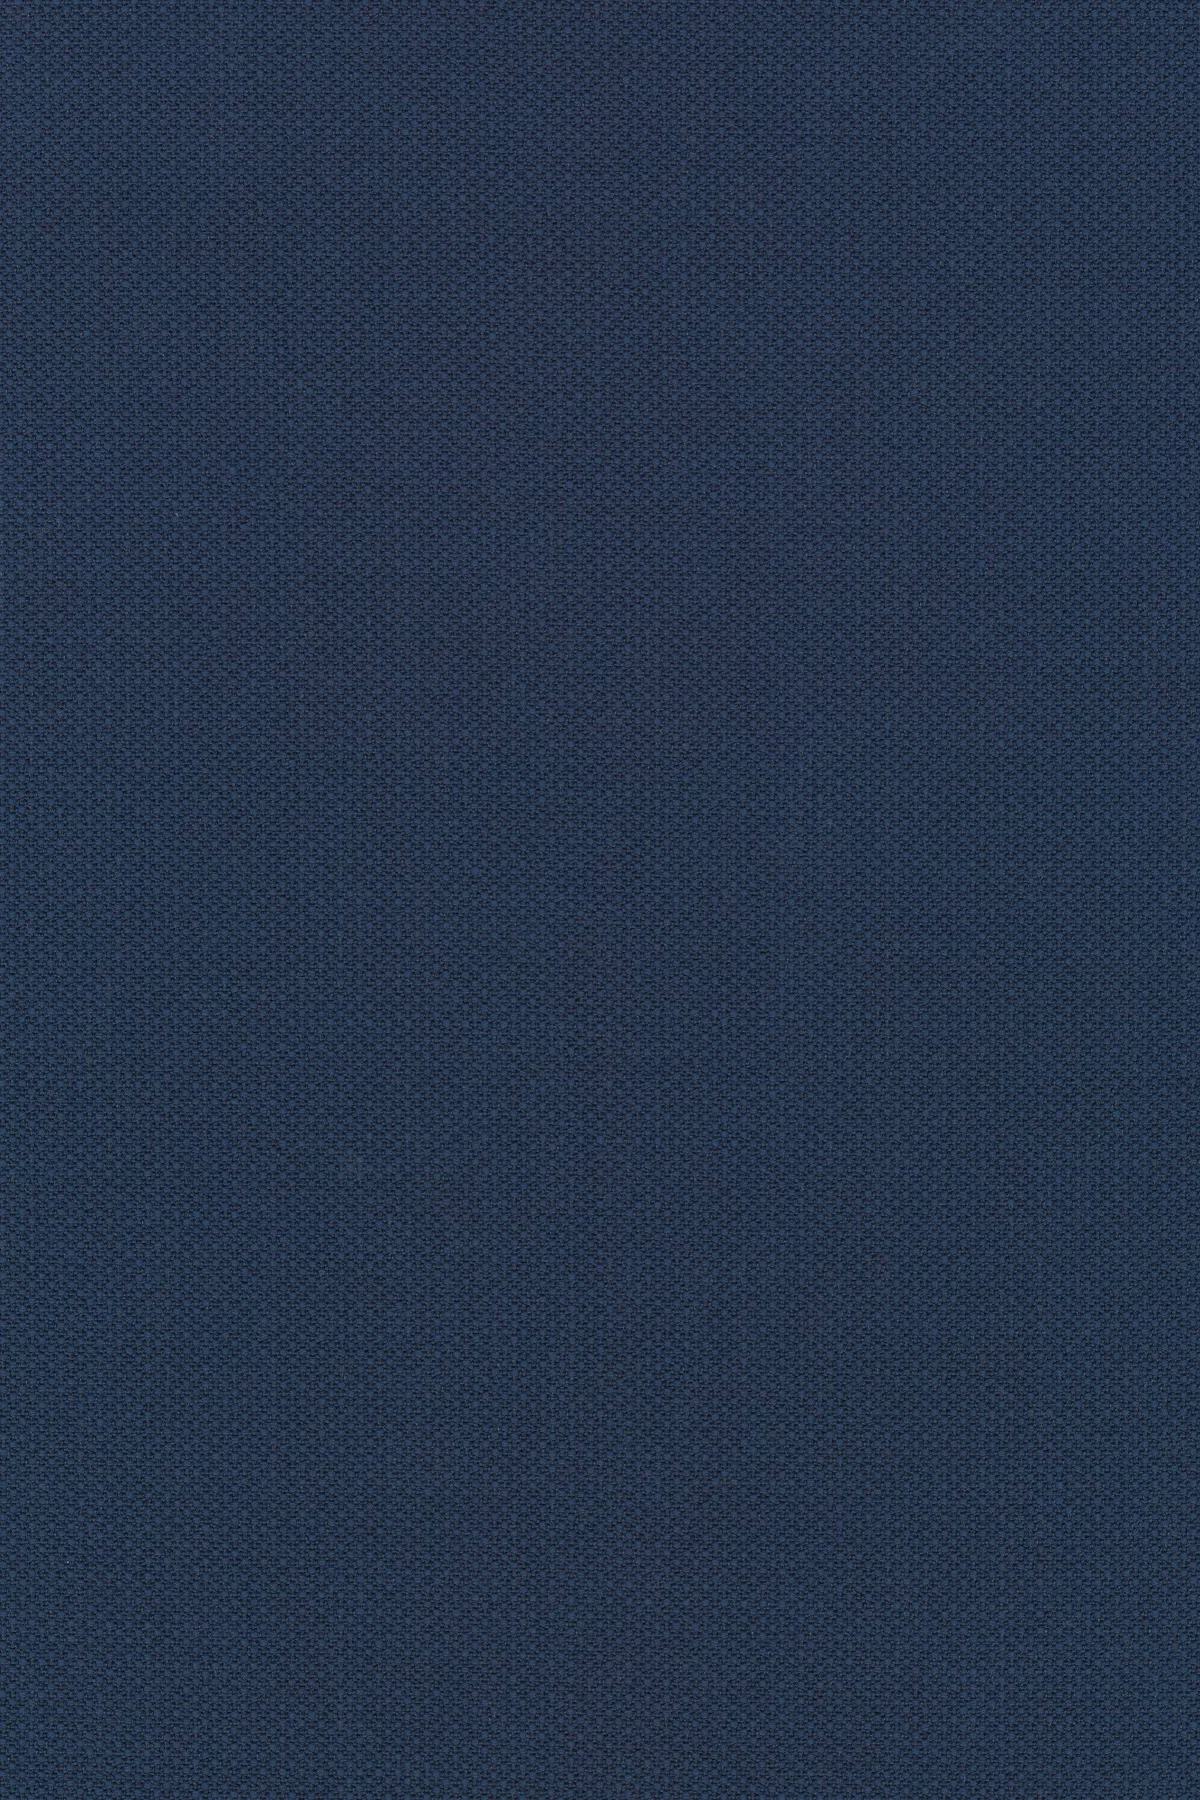 Fabric sample Fiord 791 blue